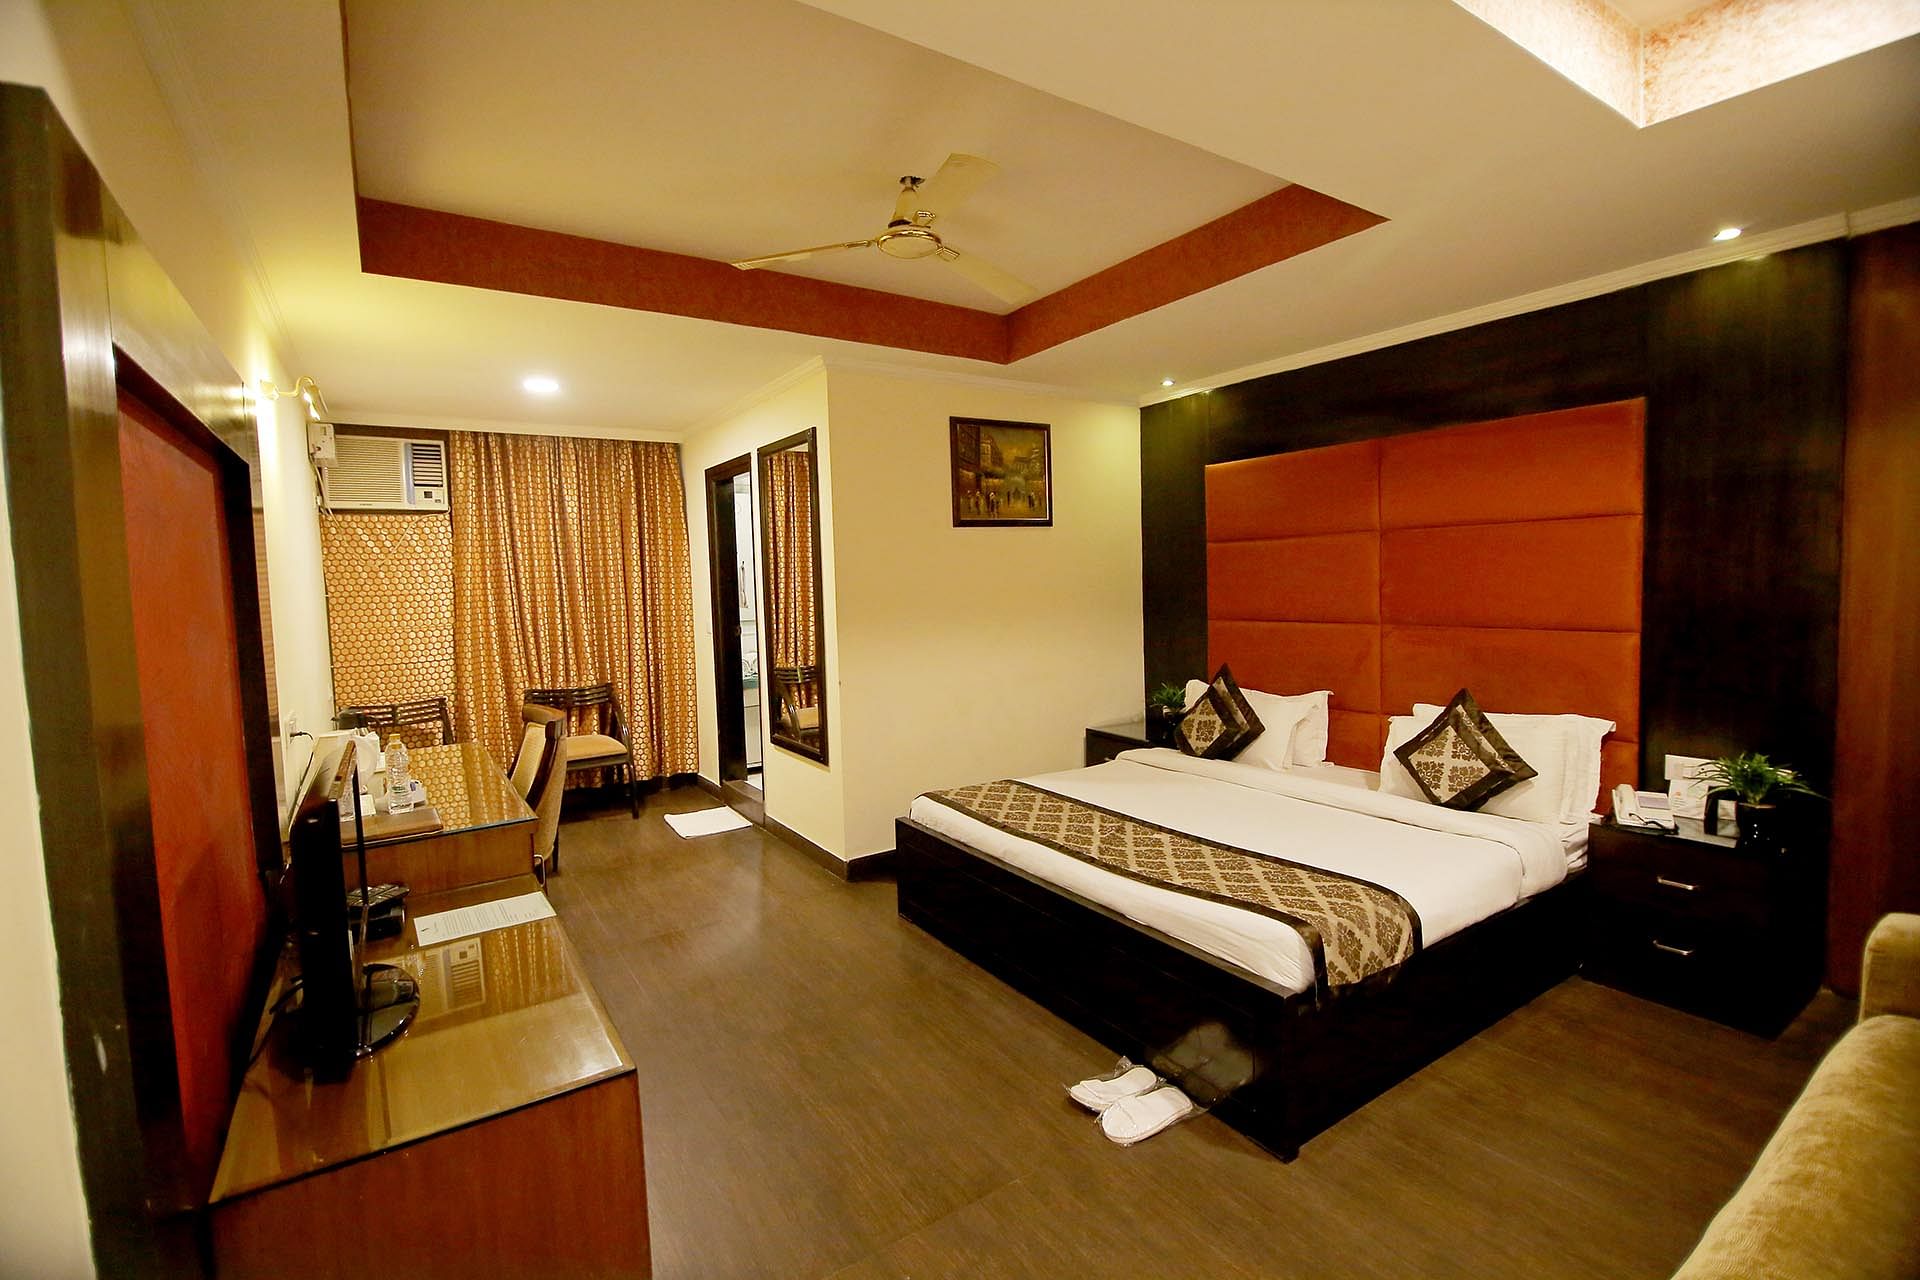 Hotel Chirag Residency in Greater Kailash 1, Delhi